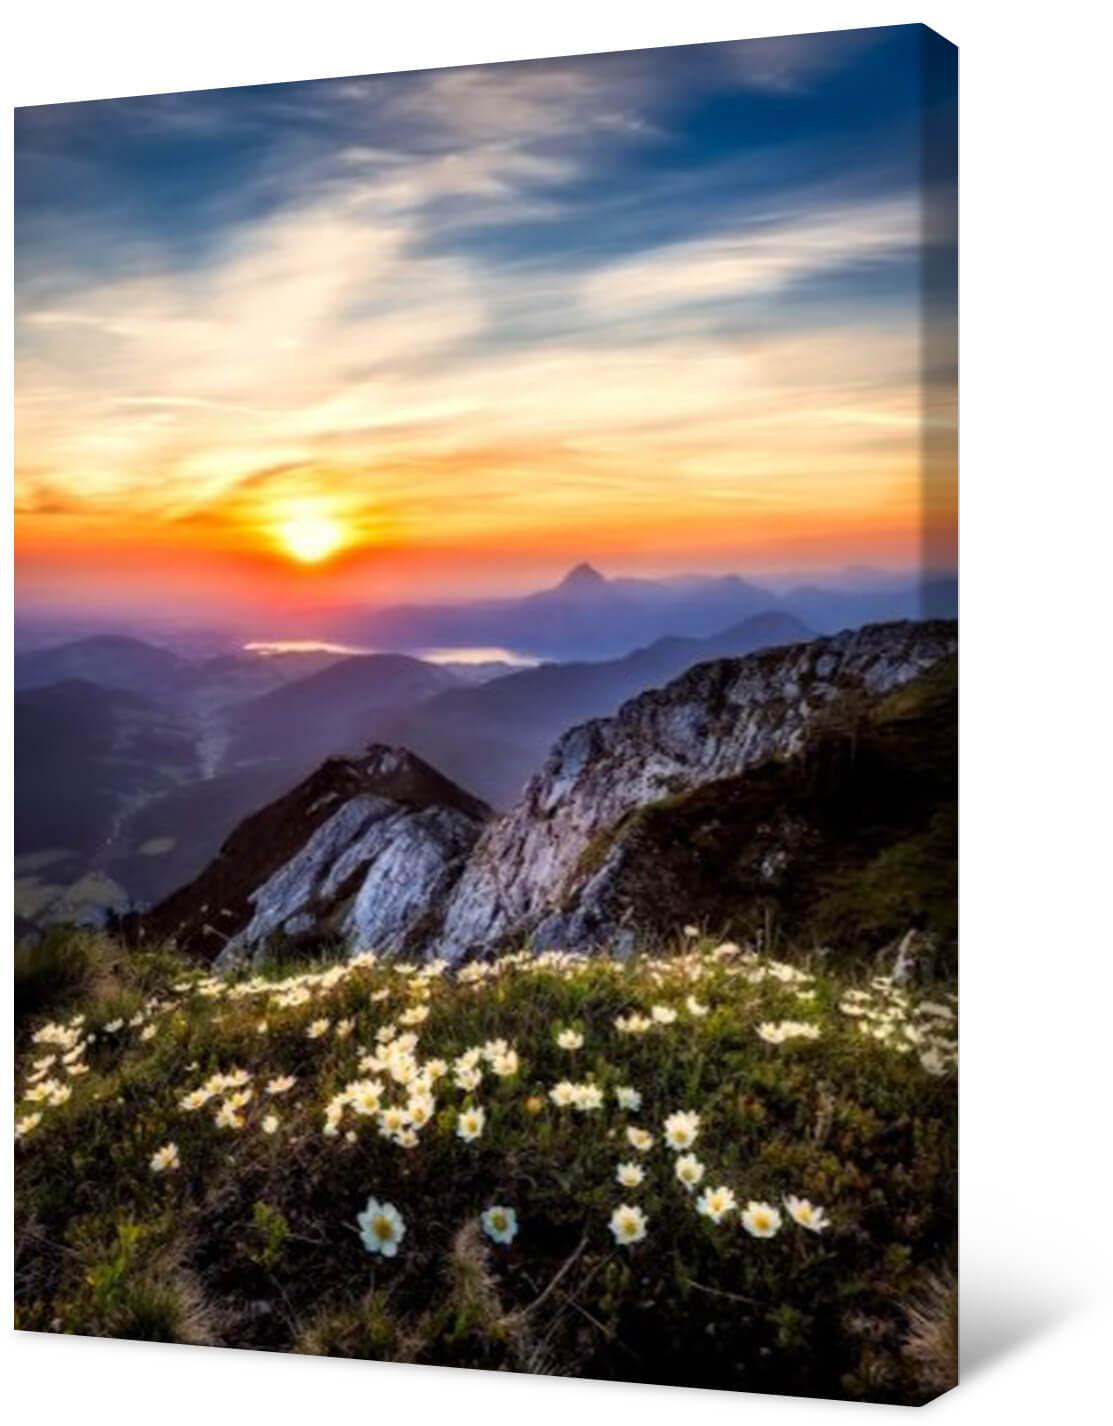 Fotomalerei auf Leinwand - Berge bei Sonnenuntergang